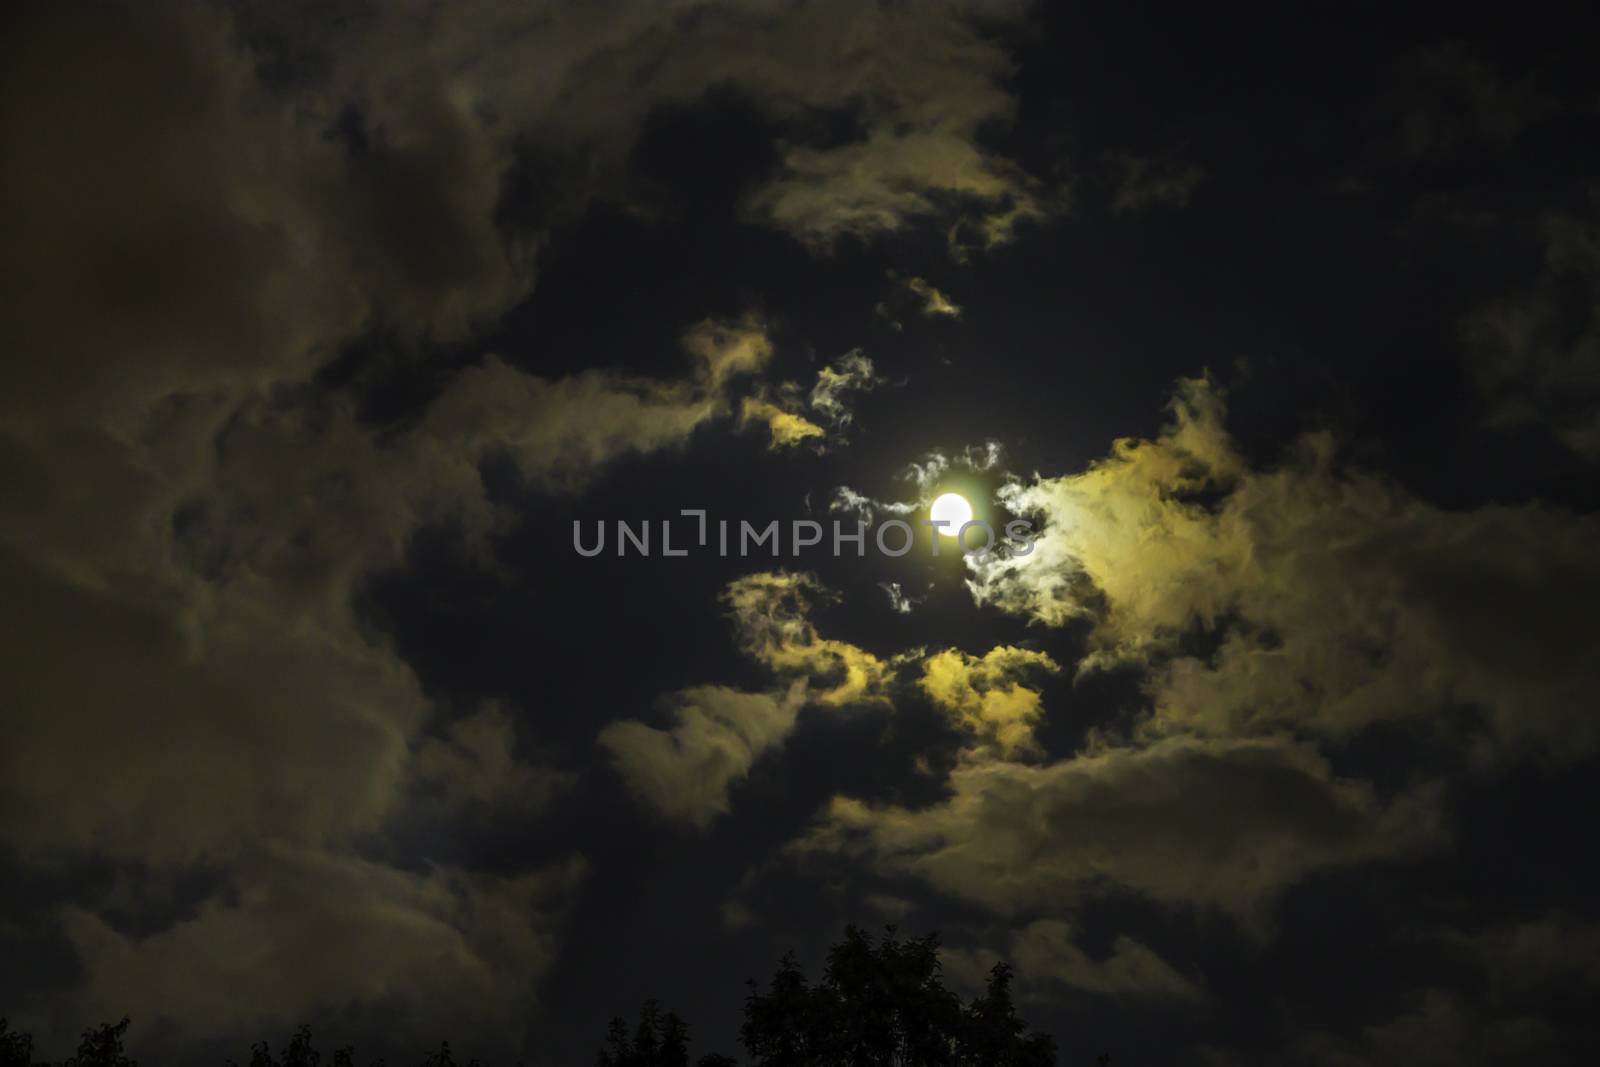 Super moon illuminating the night sky by Umbrella